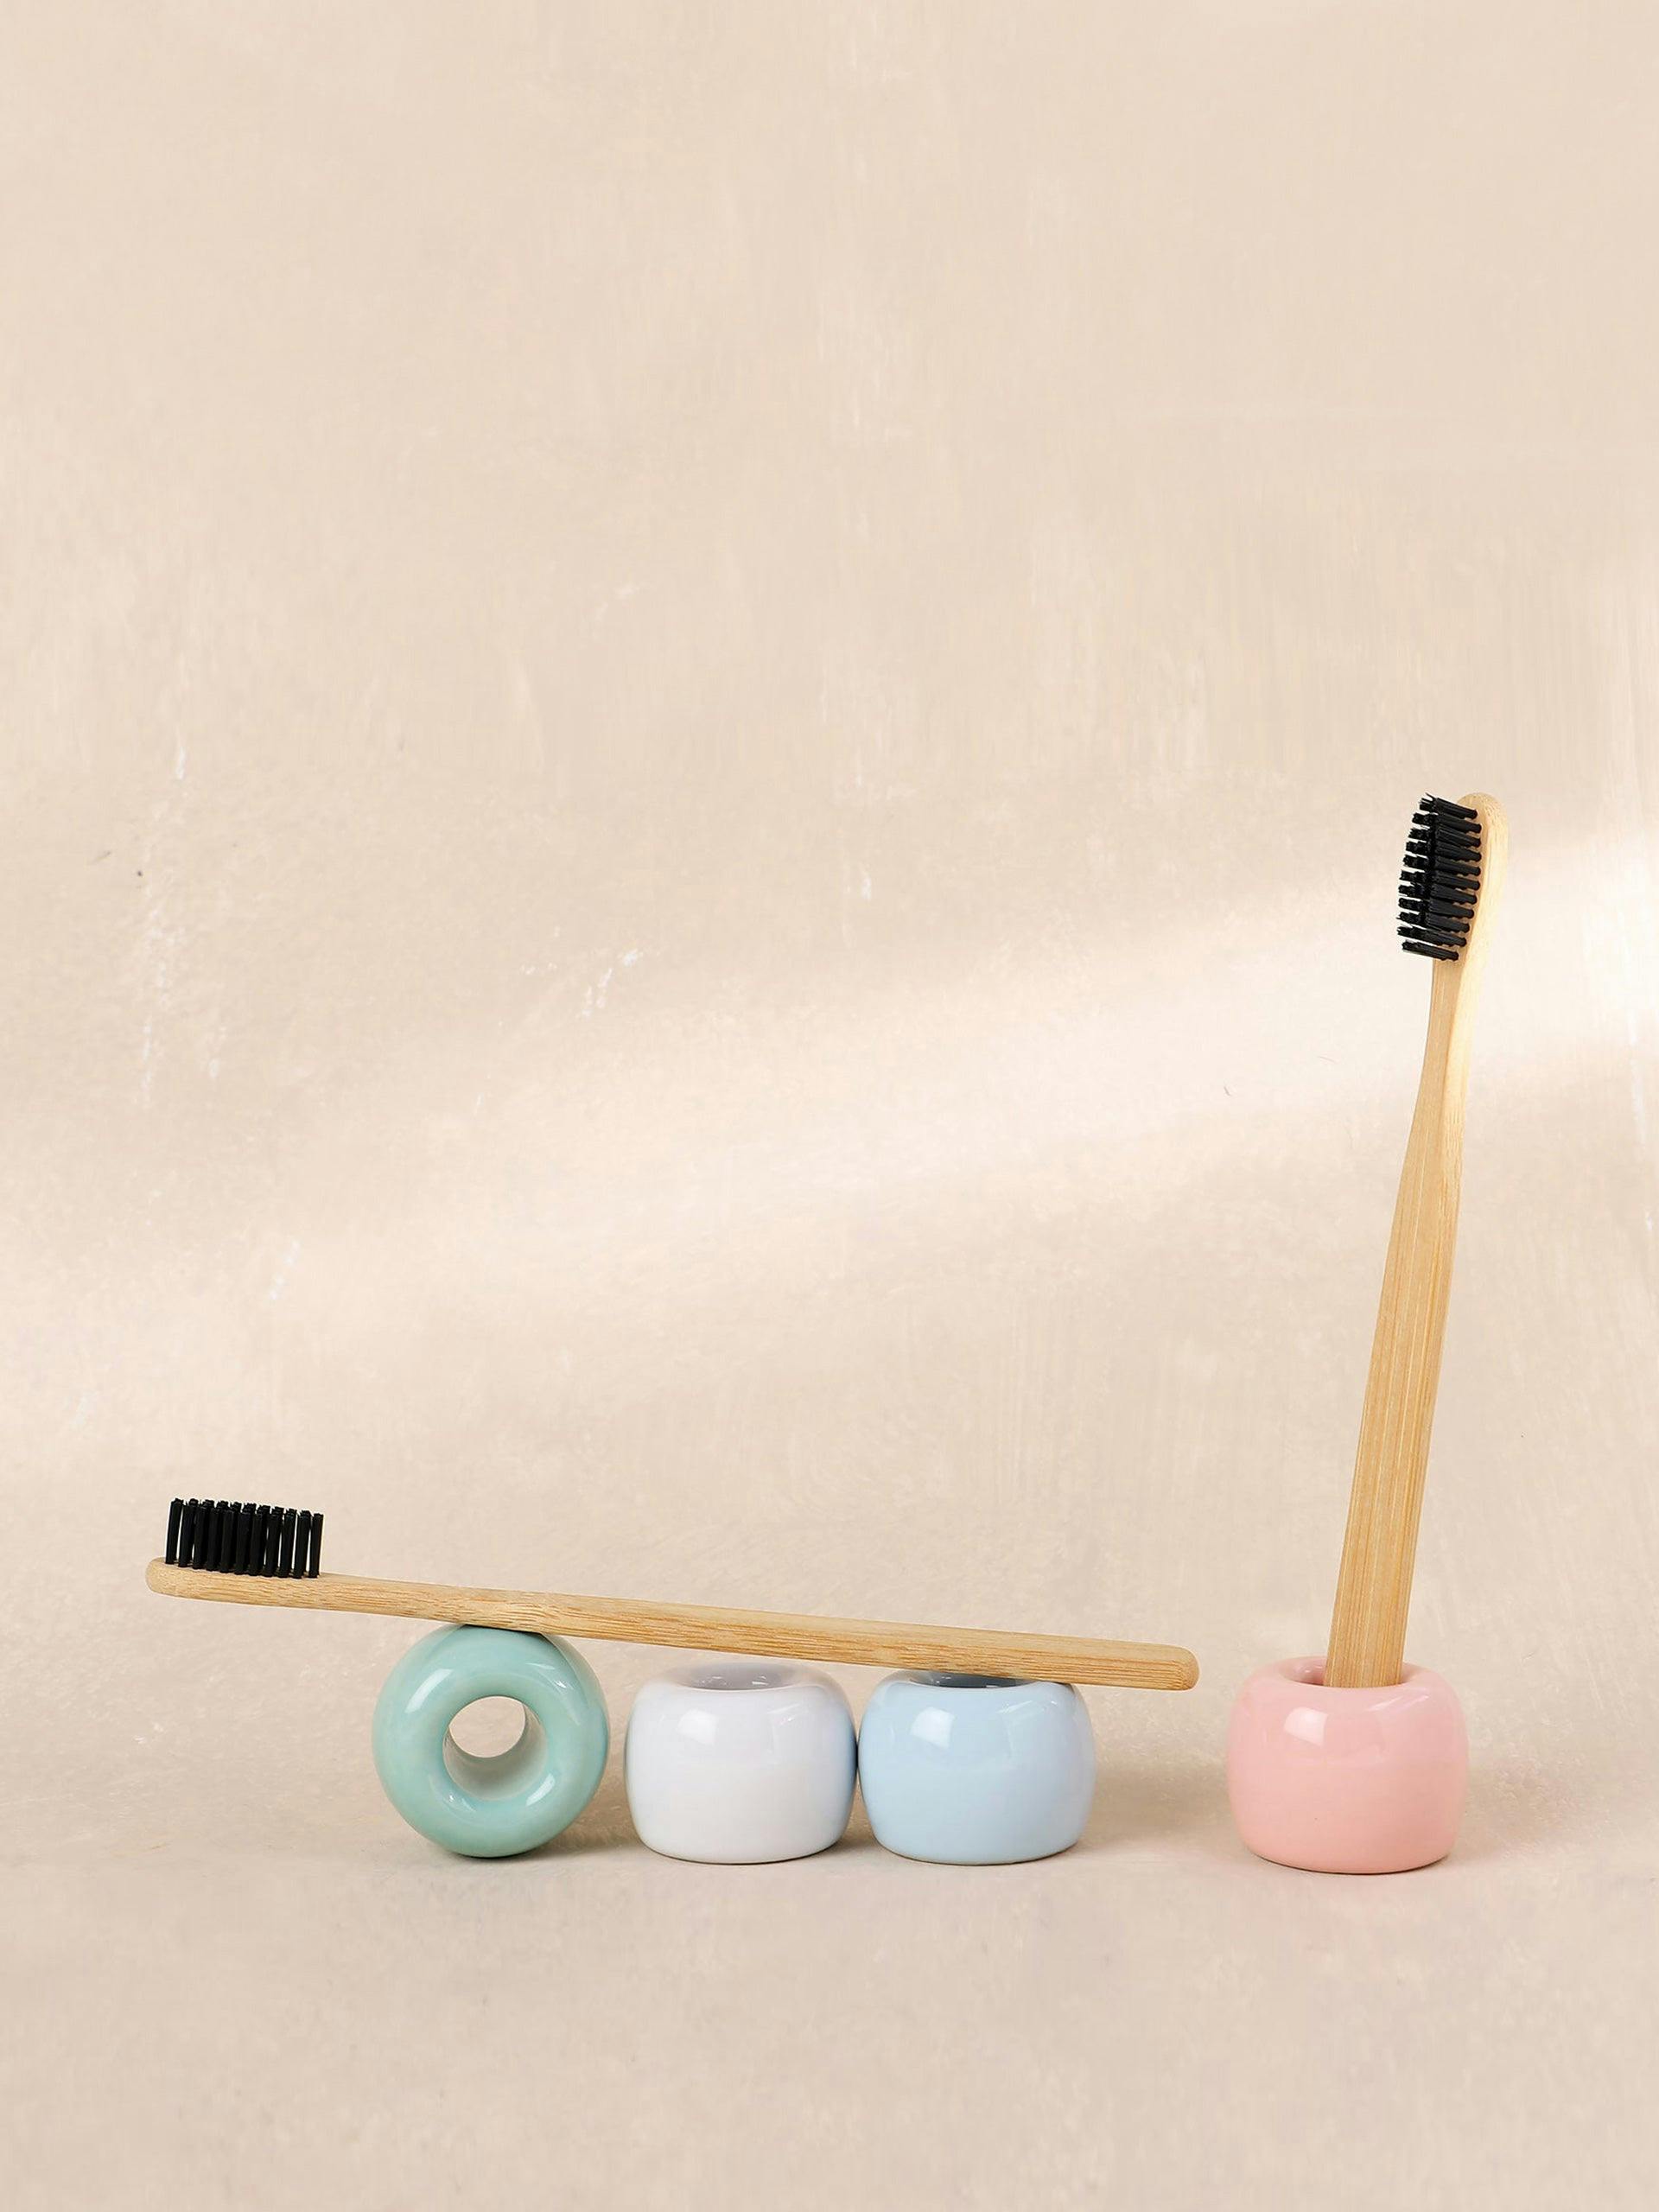 Toothbrush and toothbrush holder set